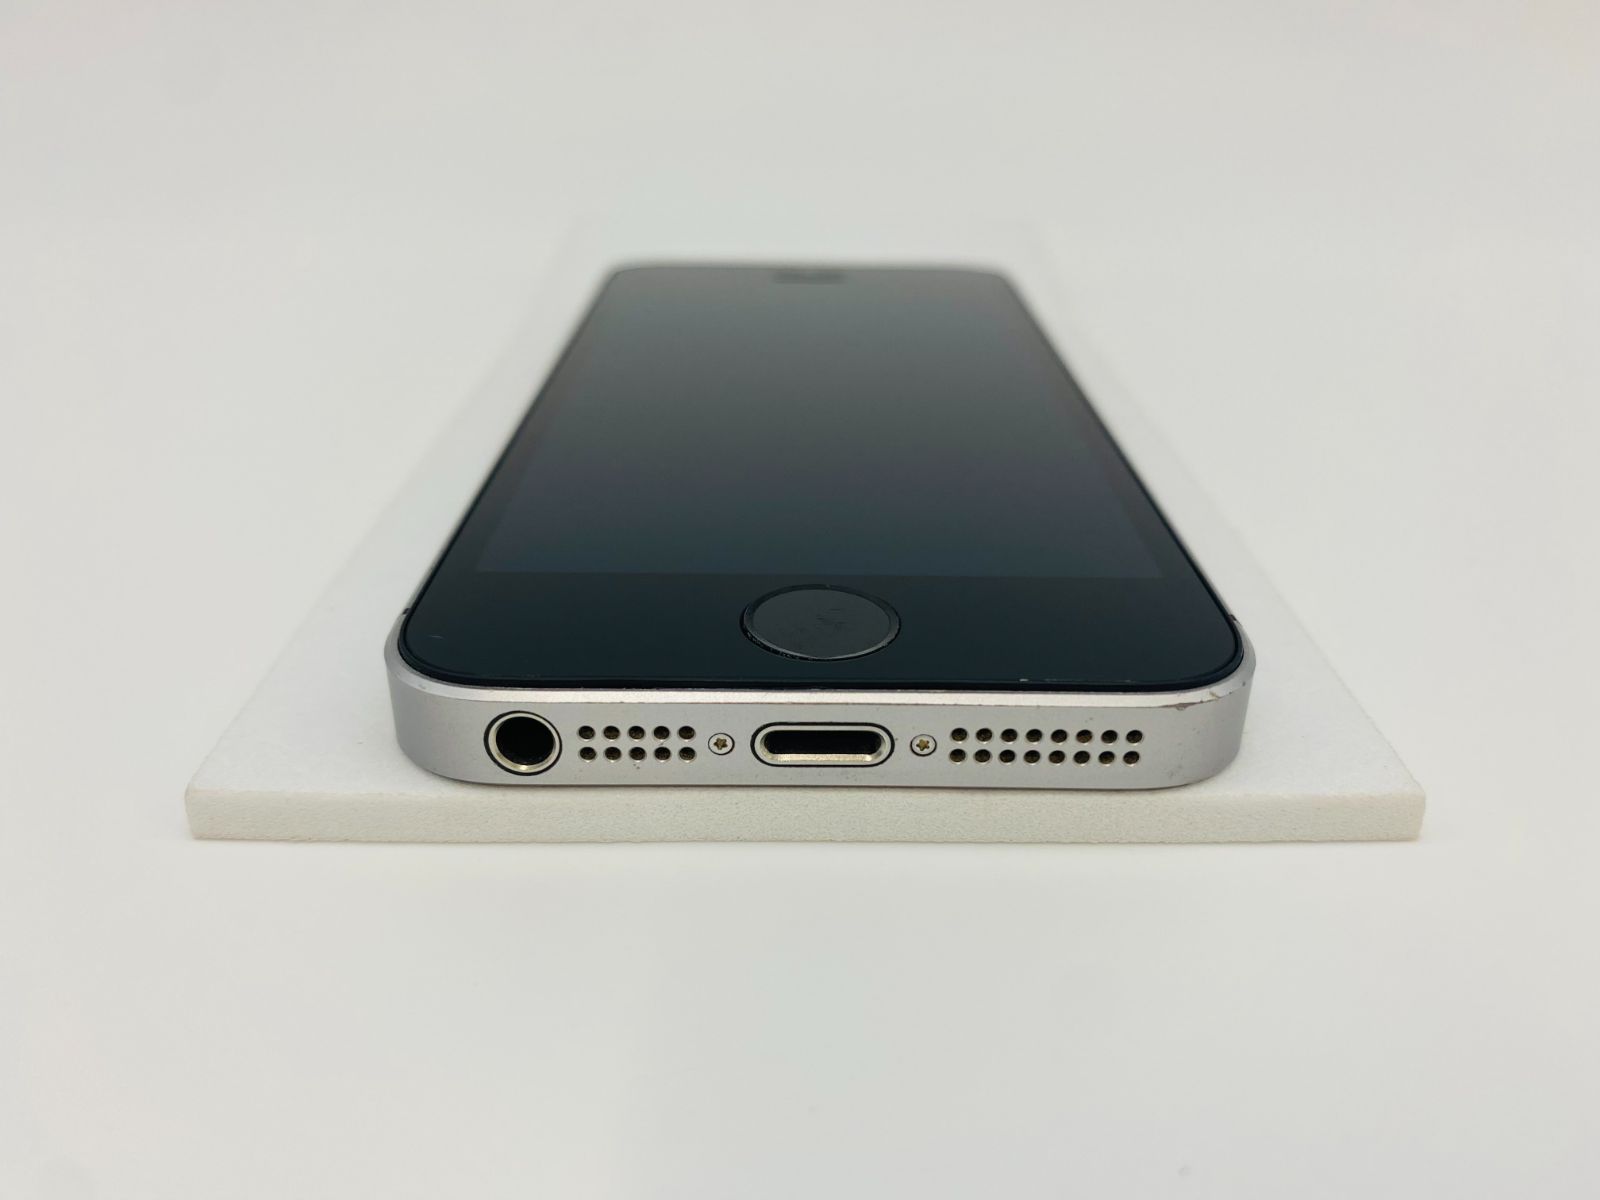 iPhone SE 第1世代 32GB スペースグレイ/シムフリー/大容量2000mAh ...